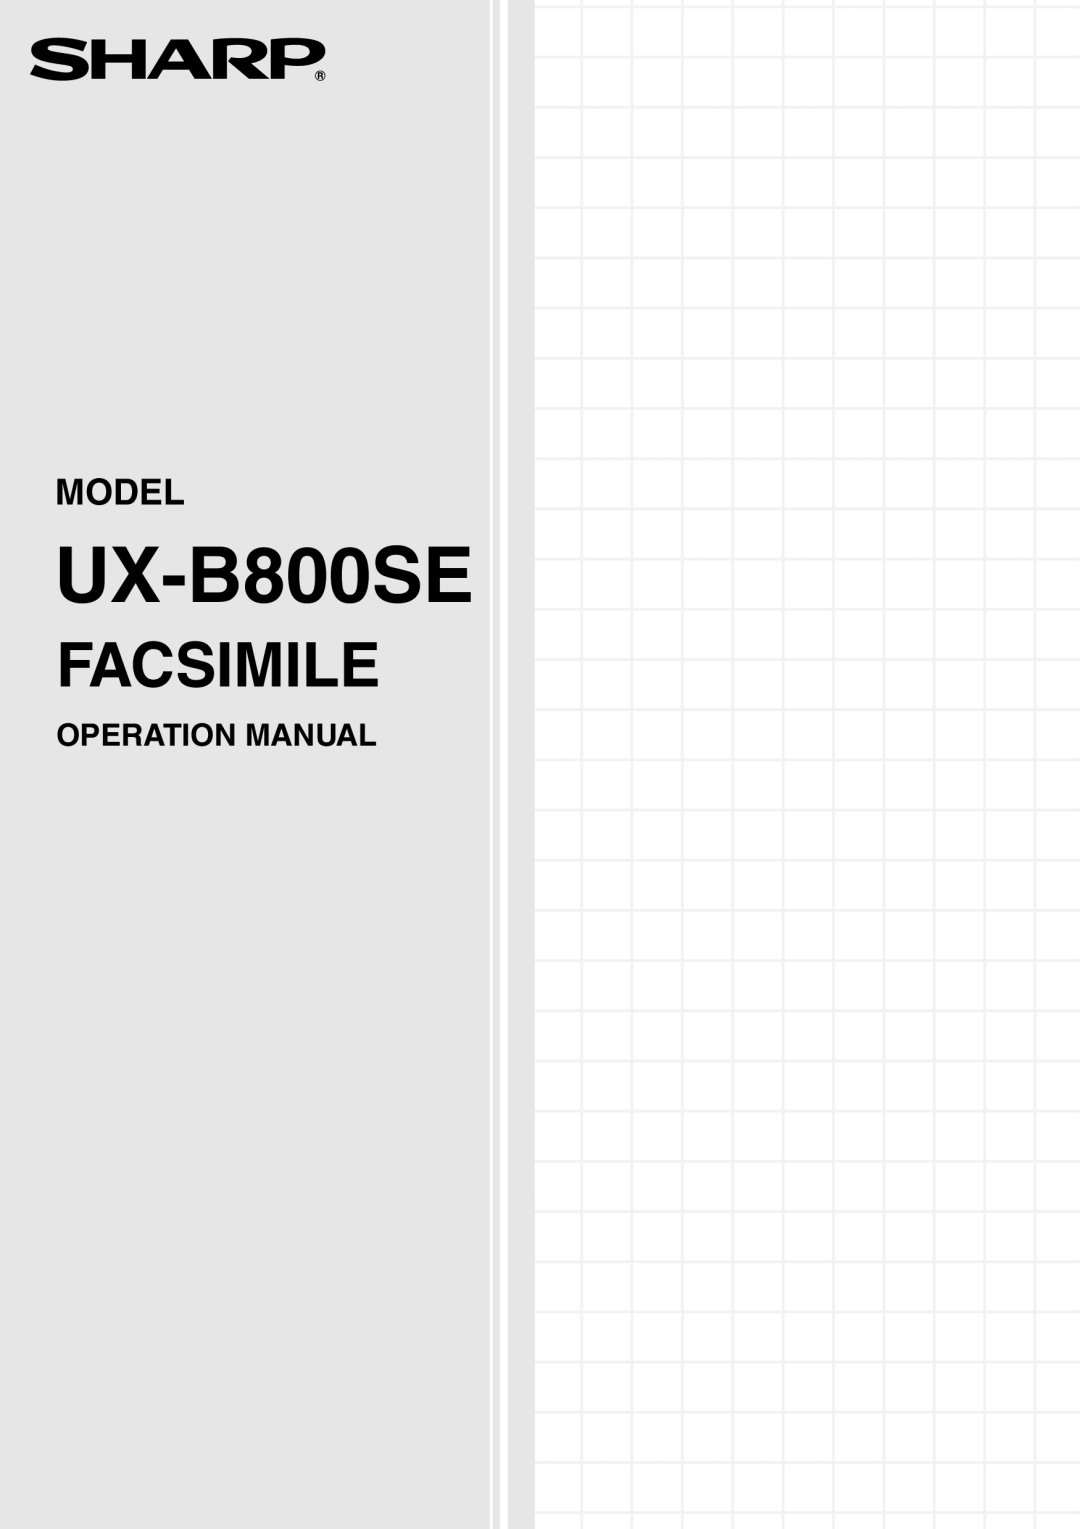 Sharp UX-B800SE operation manual Model, Operation Manual, Facsimile 